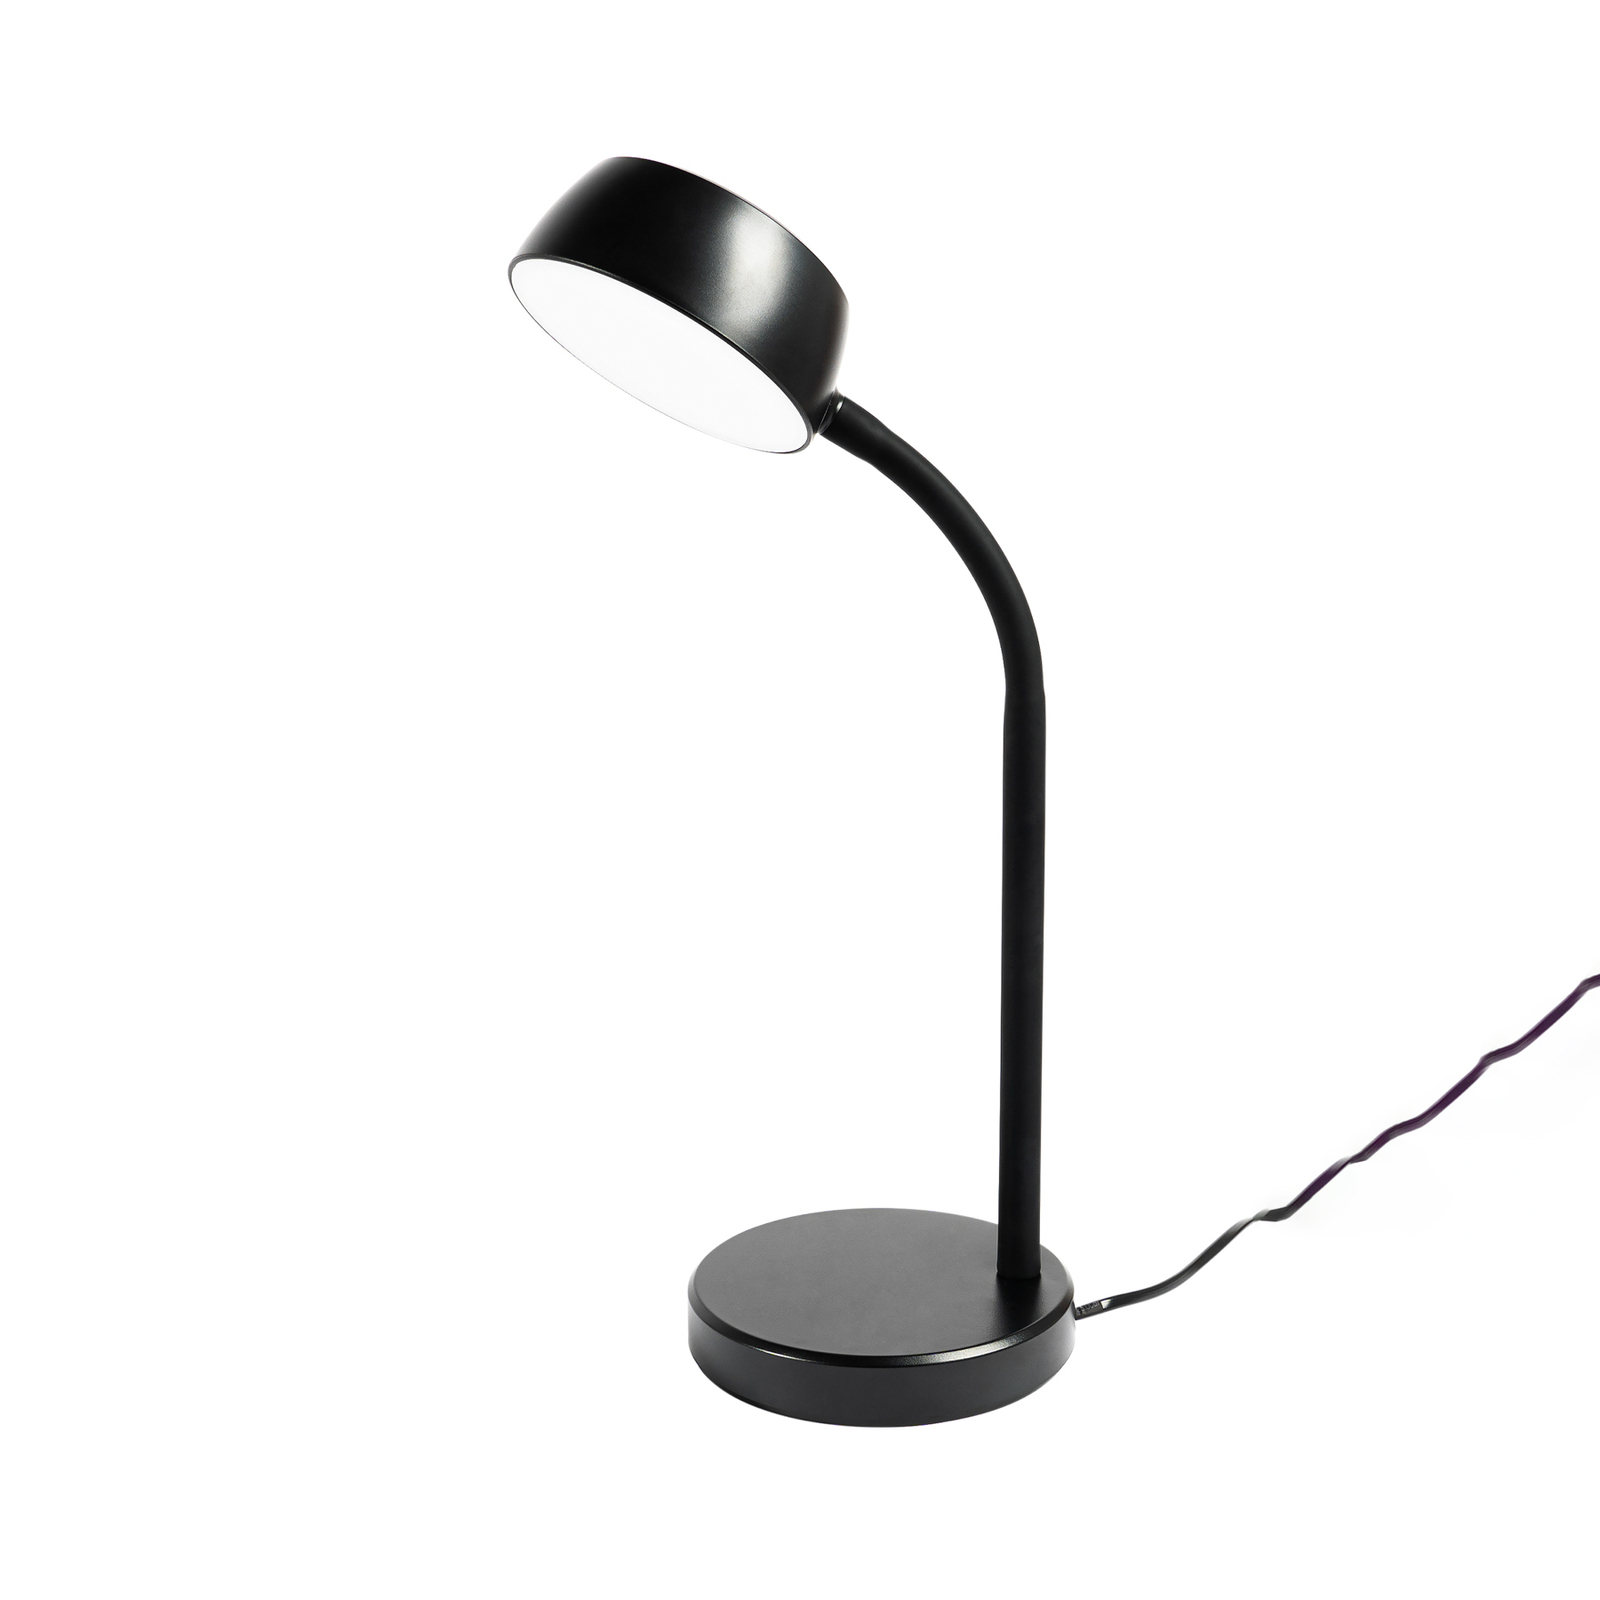 Lindby Tijan lampe de table LED, noir, bras flexible